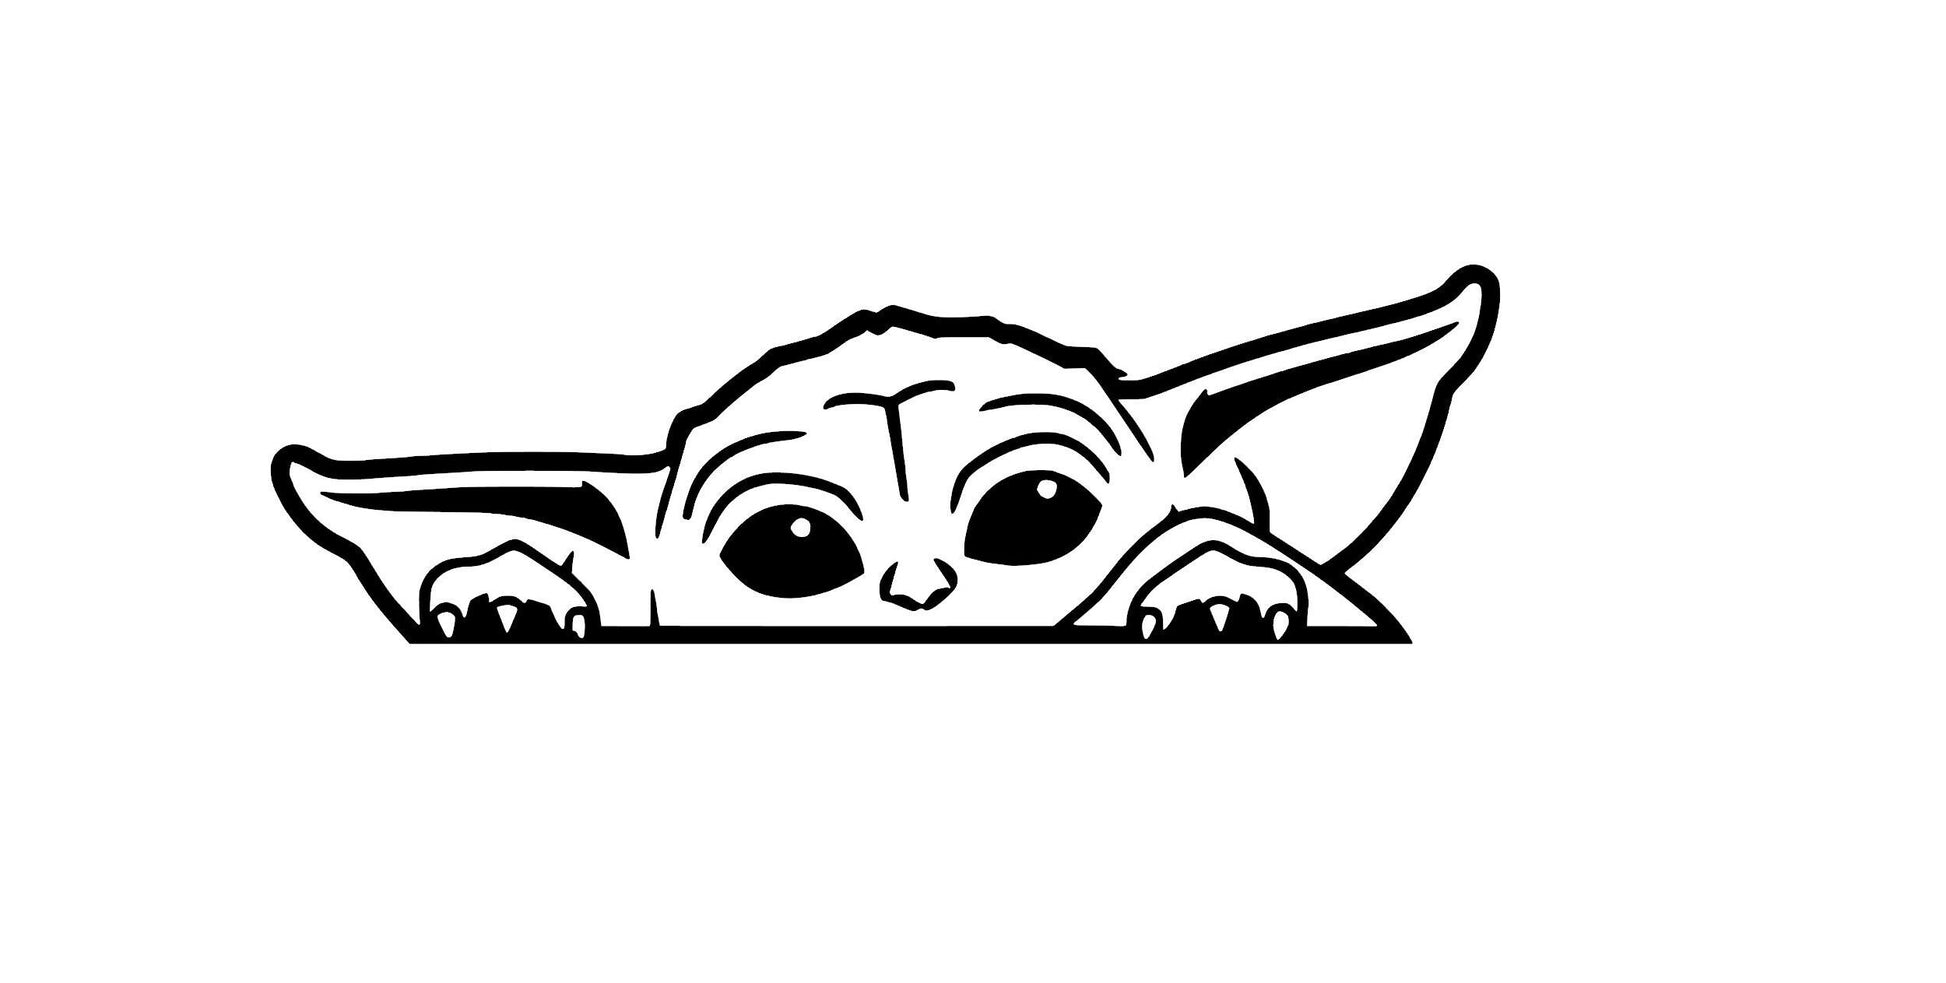 Baby Yoda Vinyl Grogu Star Wars The Mandalorian Decal Car Window Sicker